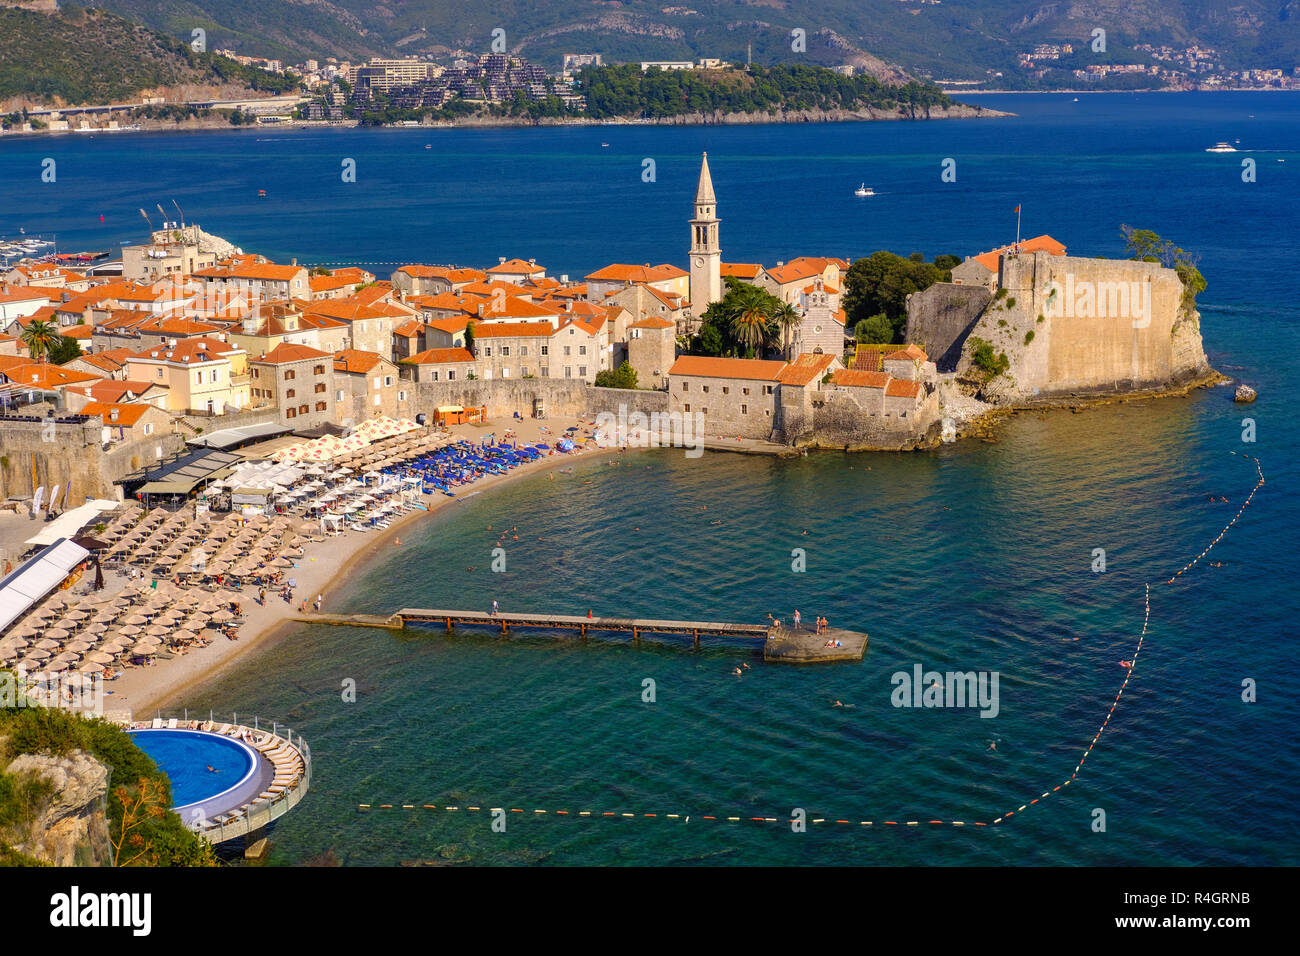 Old town with city beach, Budva, Adriatic coast, Montenegro Stock Photo